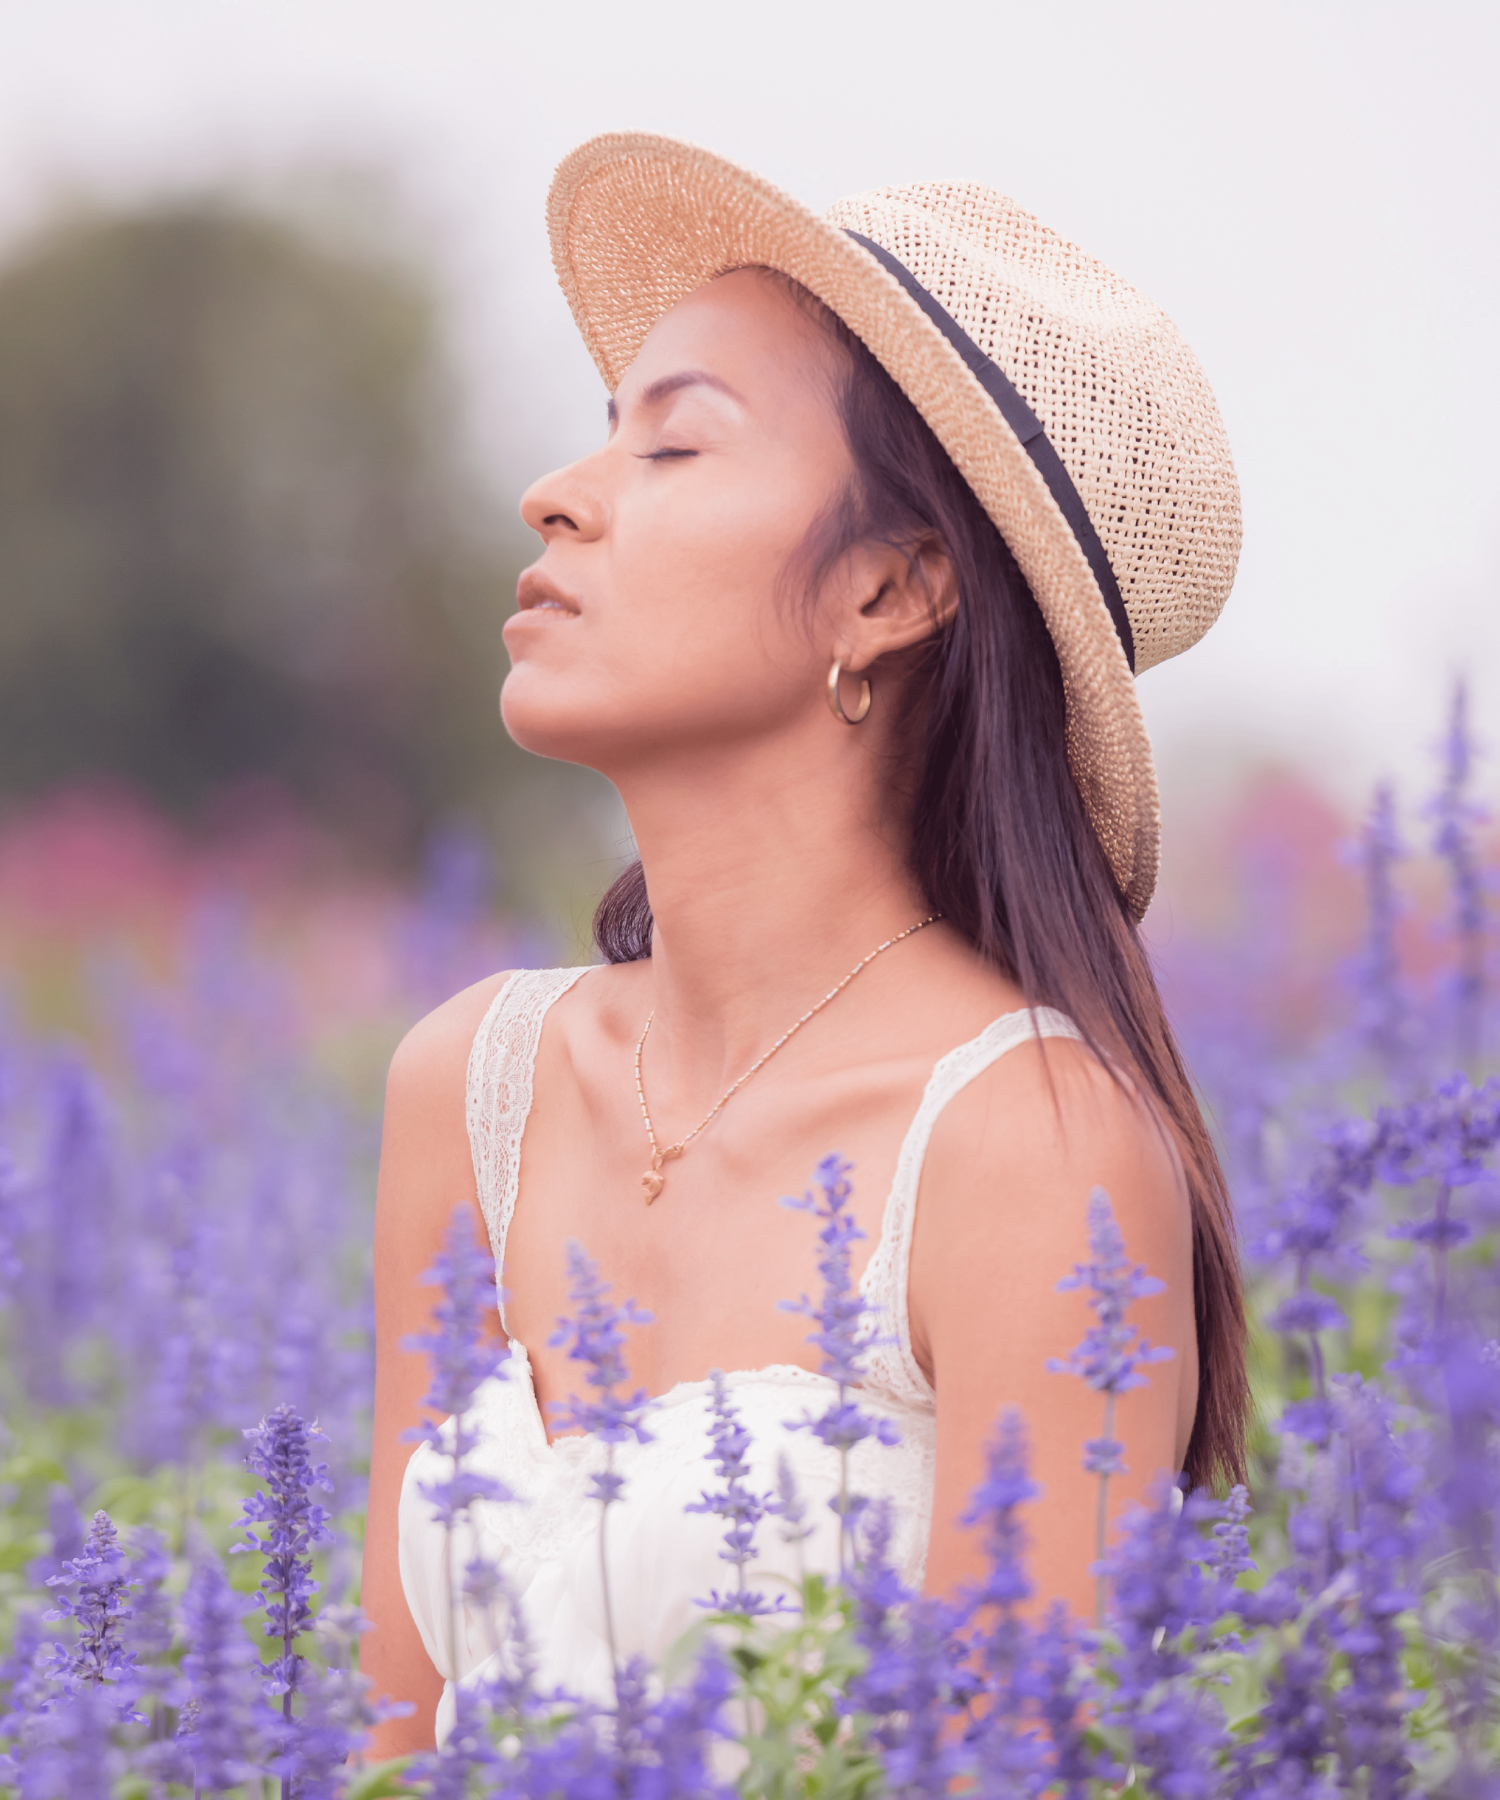 Femme qui médite dans le champ de lavande | Meditation in a lavender field in bloom near Montreal